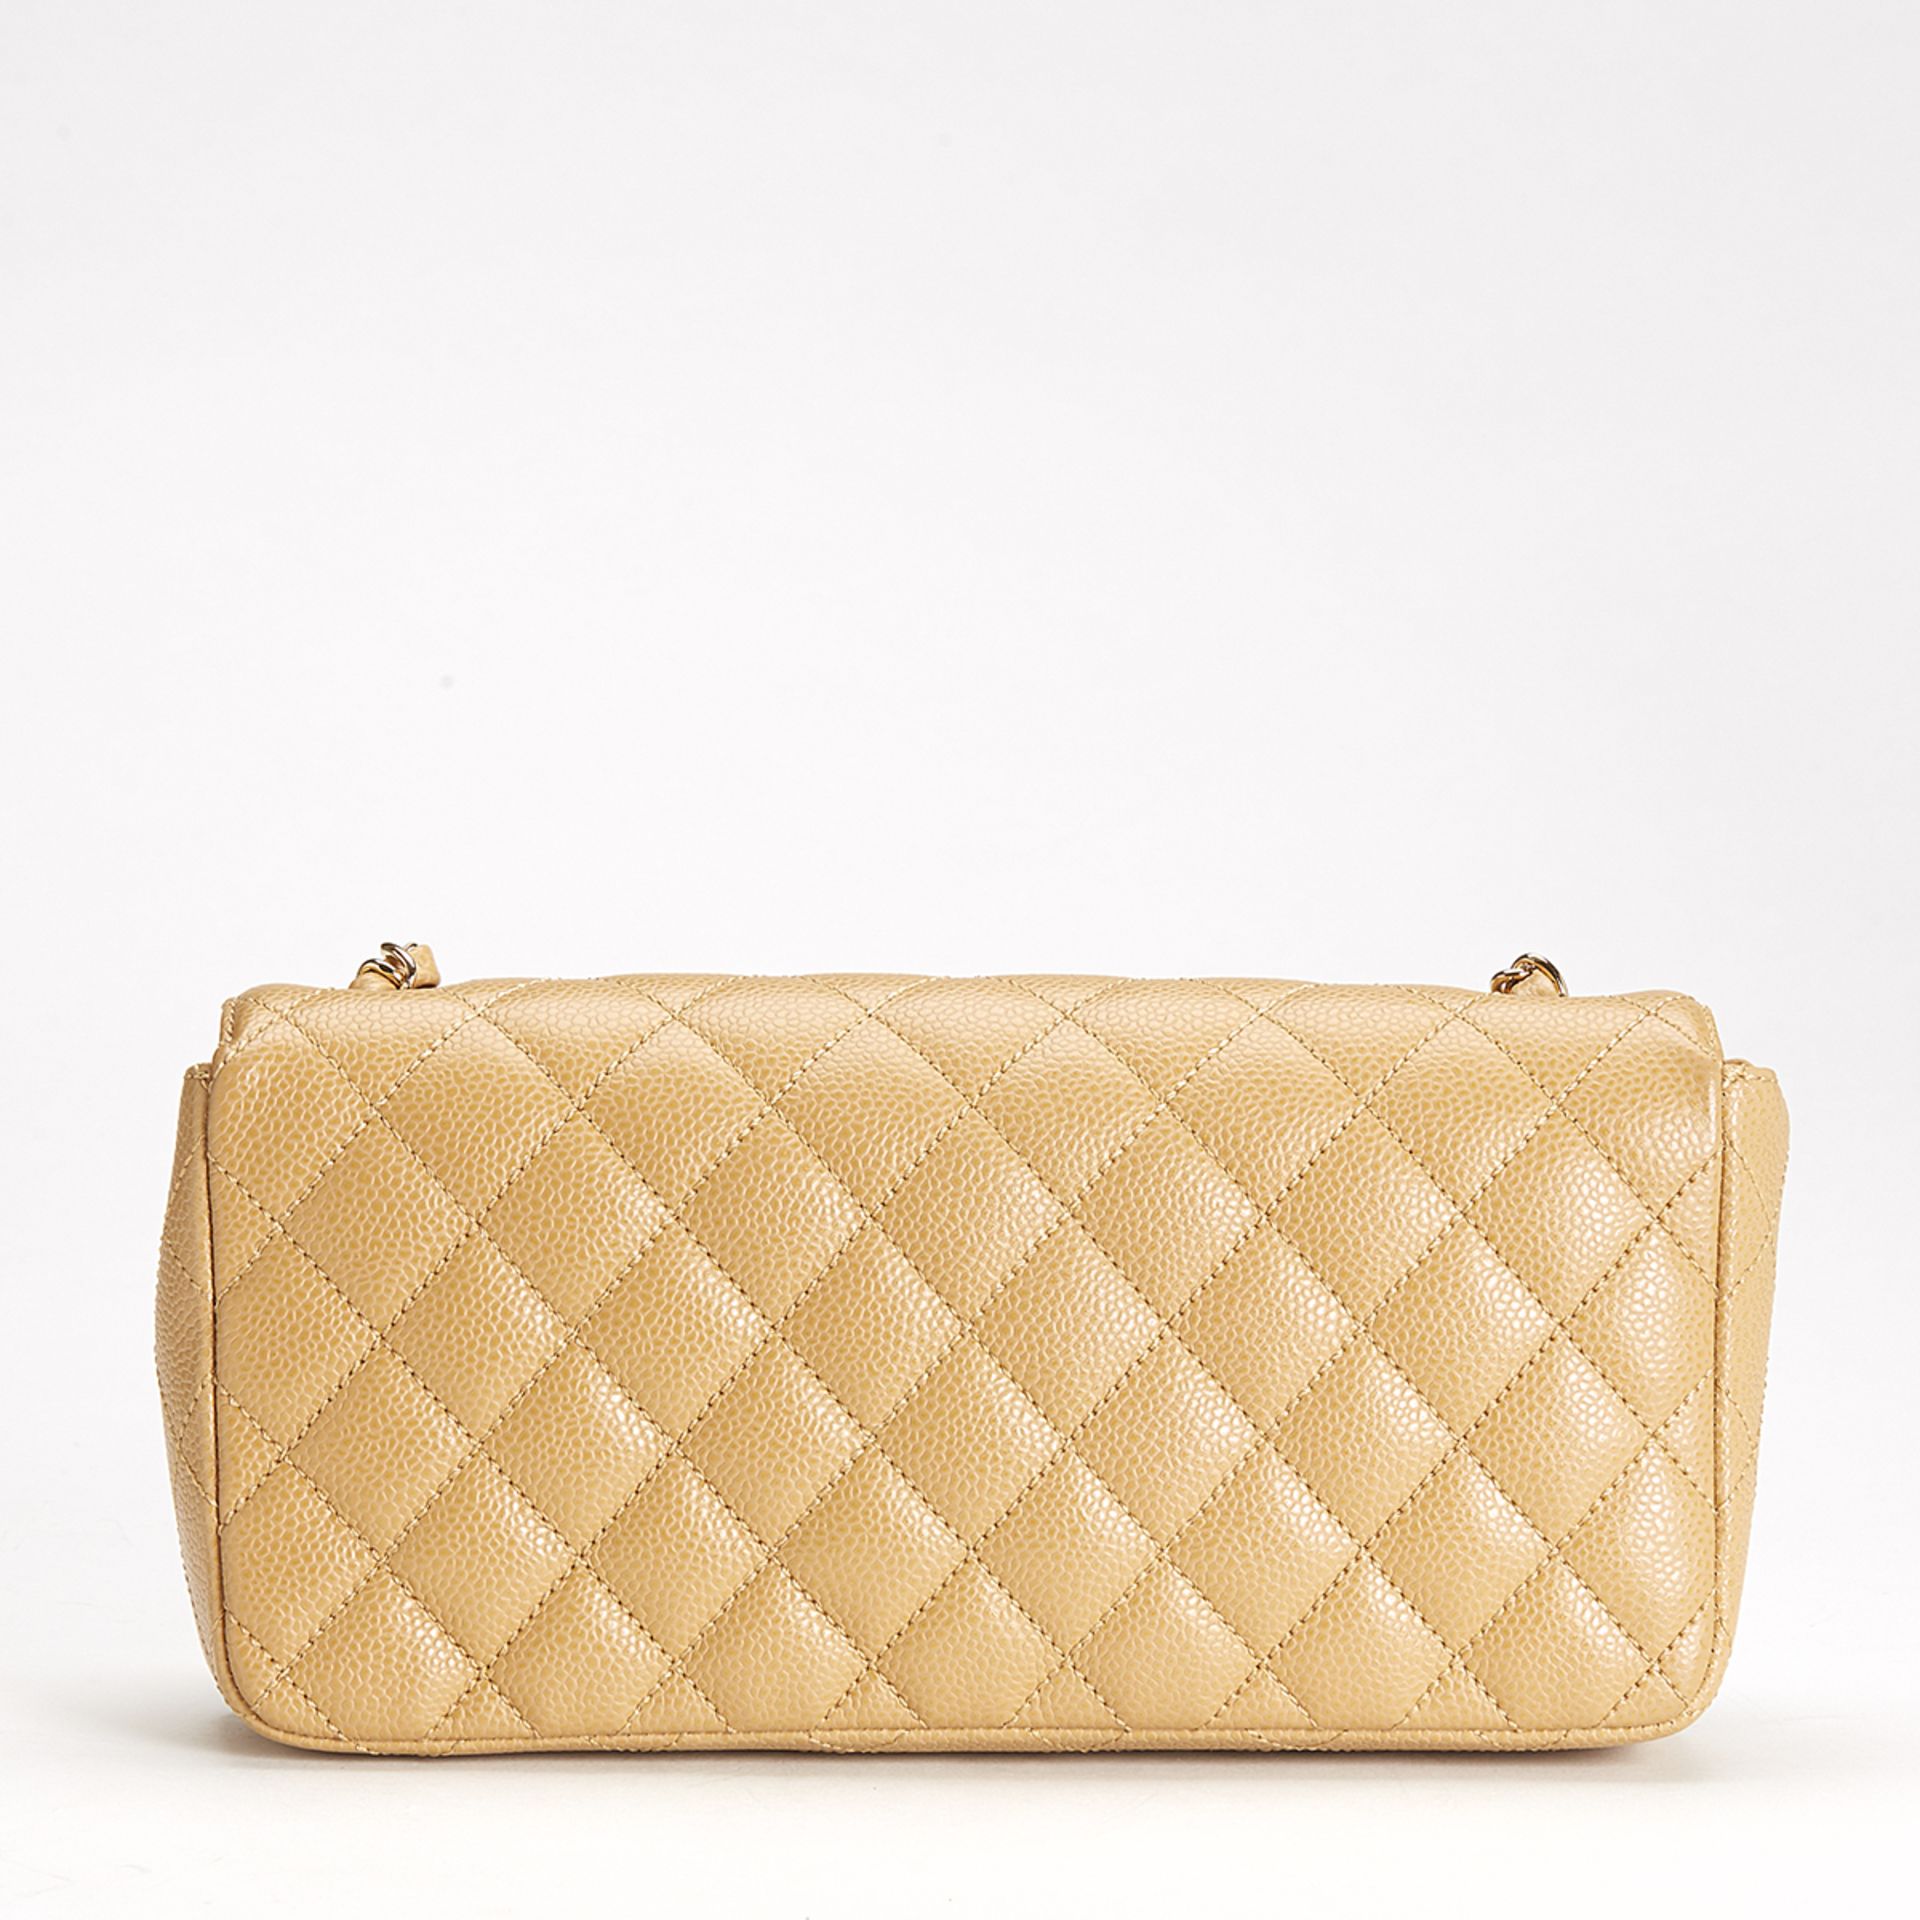 Chanel, Classic Single Flap Bag - Image 4 of 10